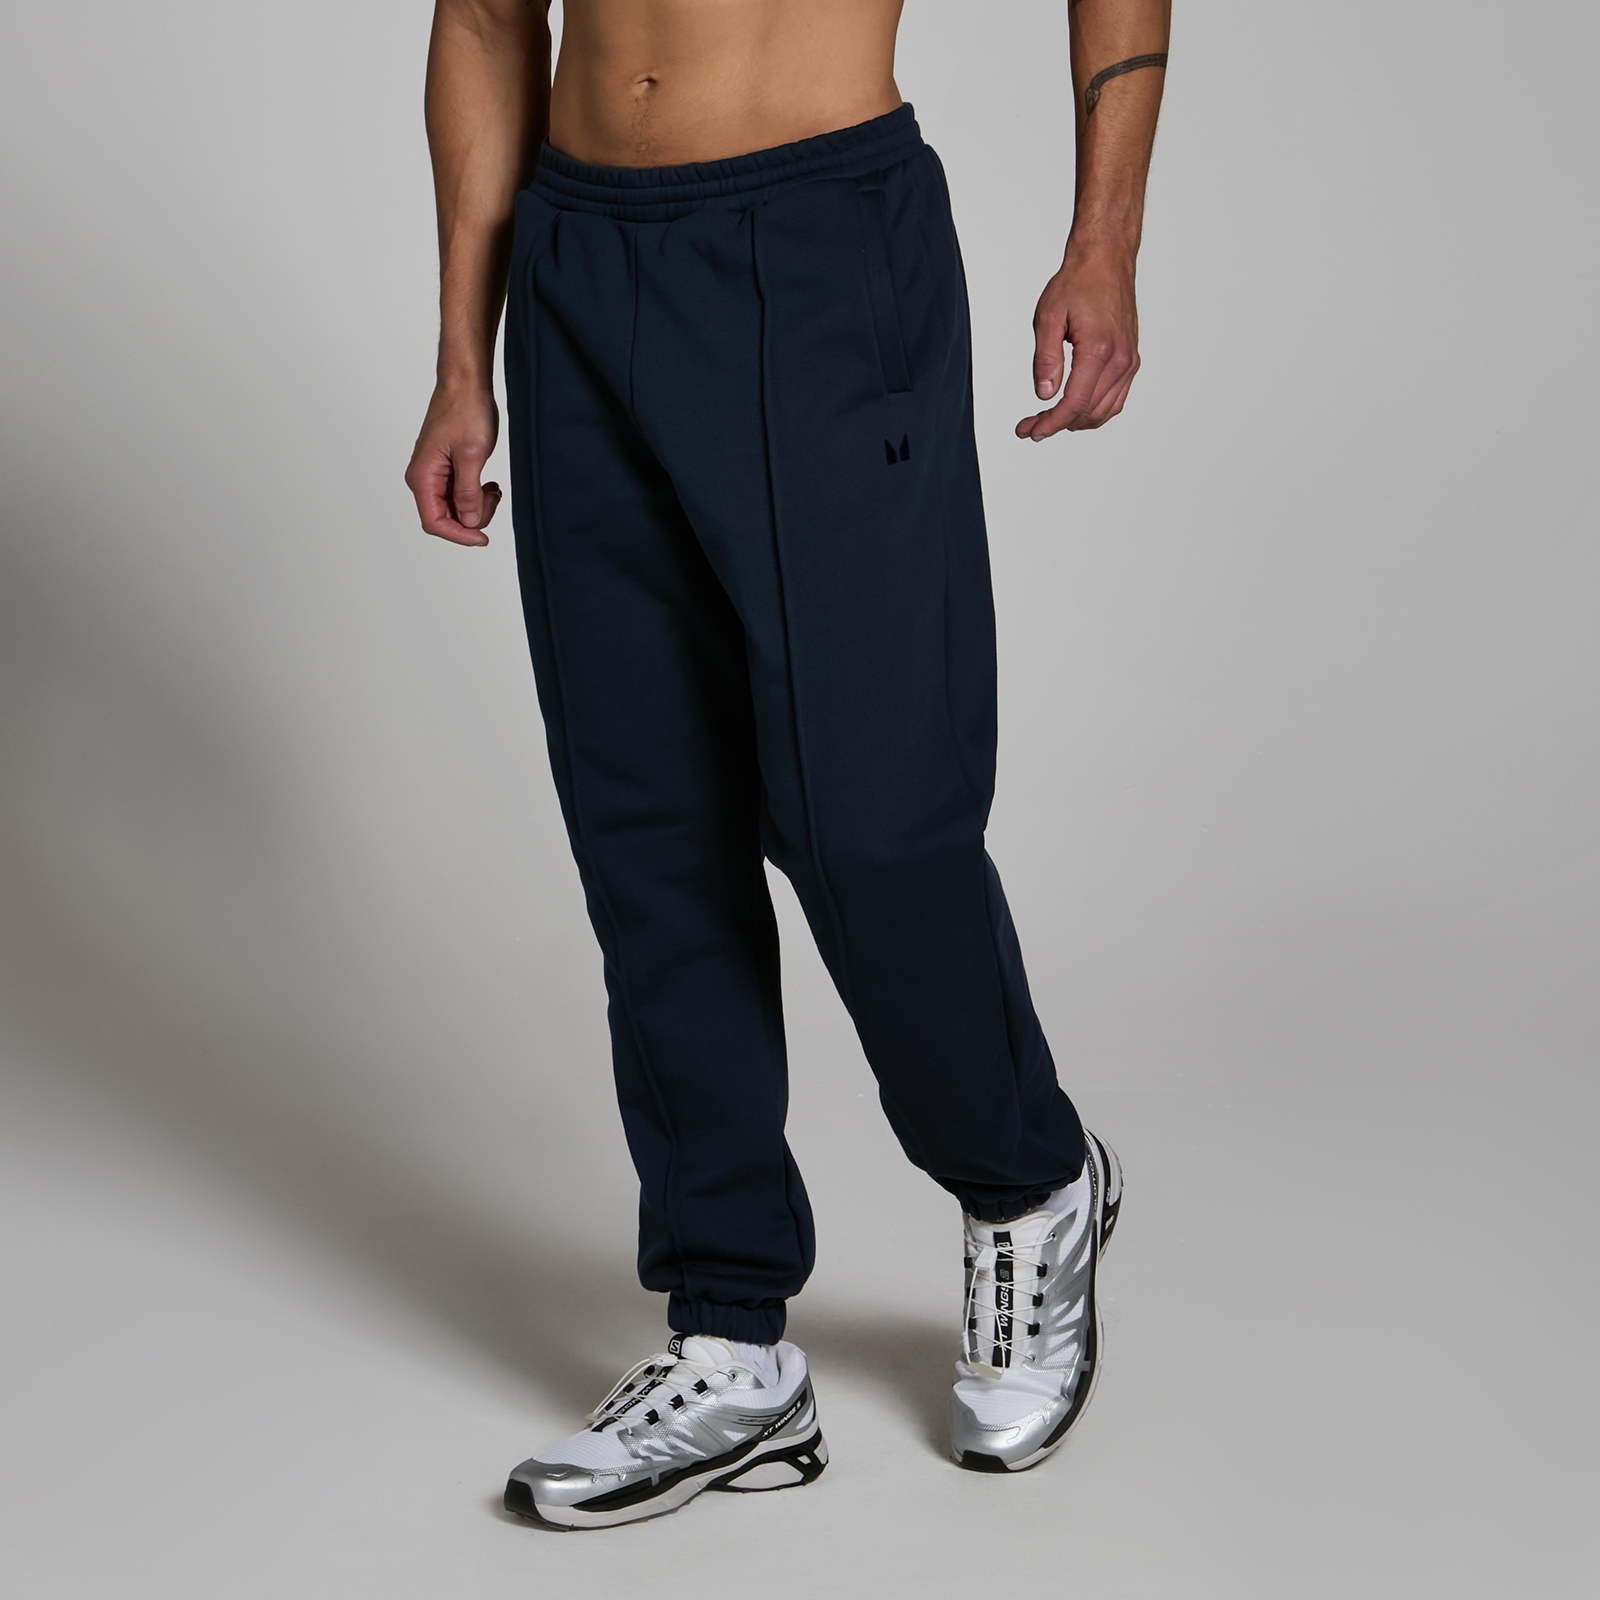 Image of Pantaloni da jogging pesanti oversize MP Lifestyle da uomo - Blu navy scuro - XXXL